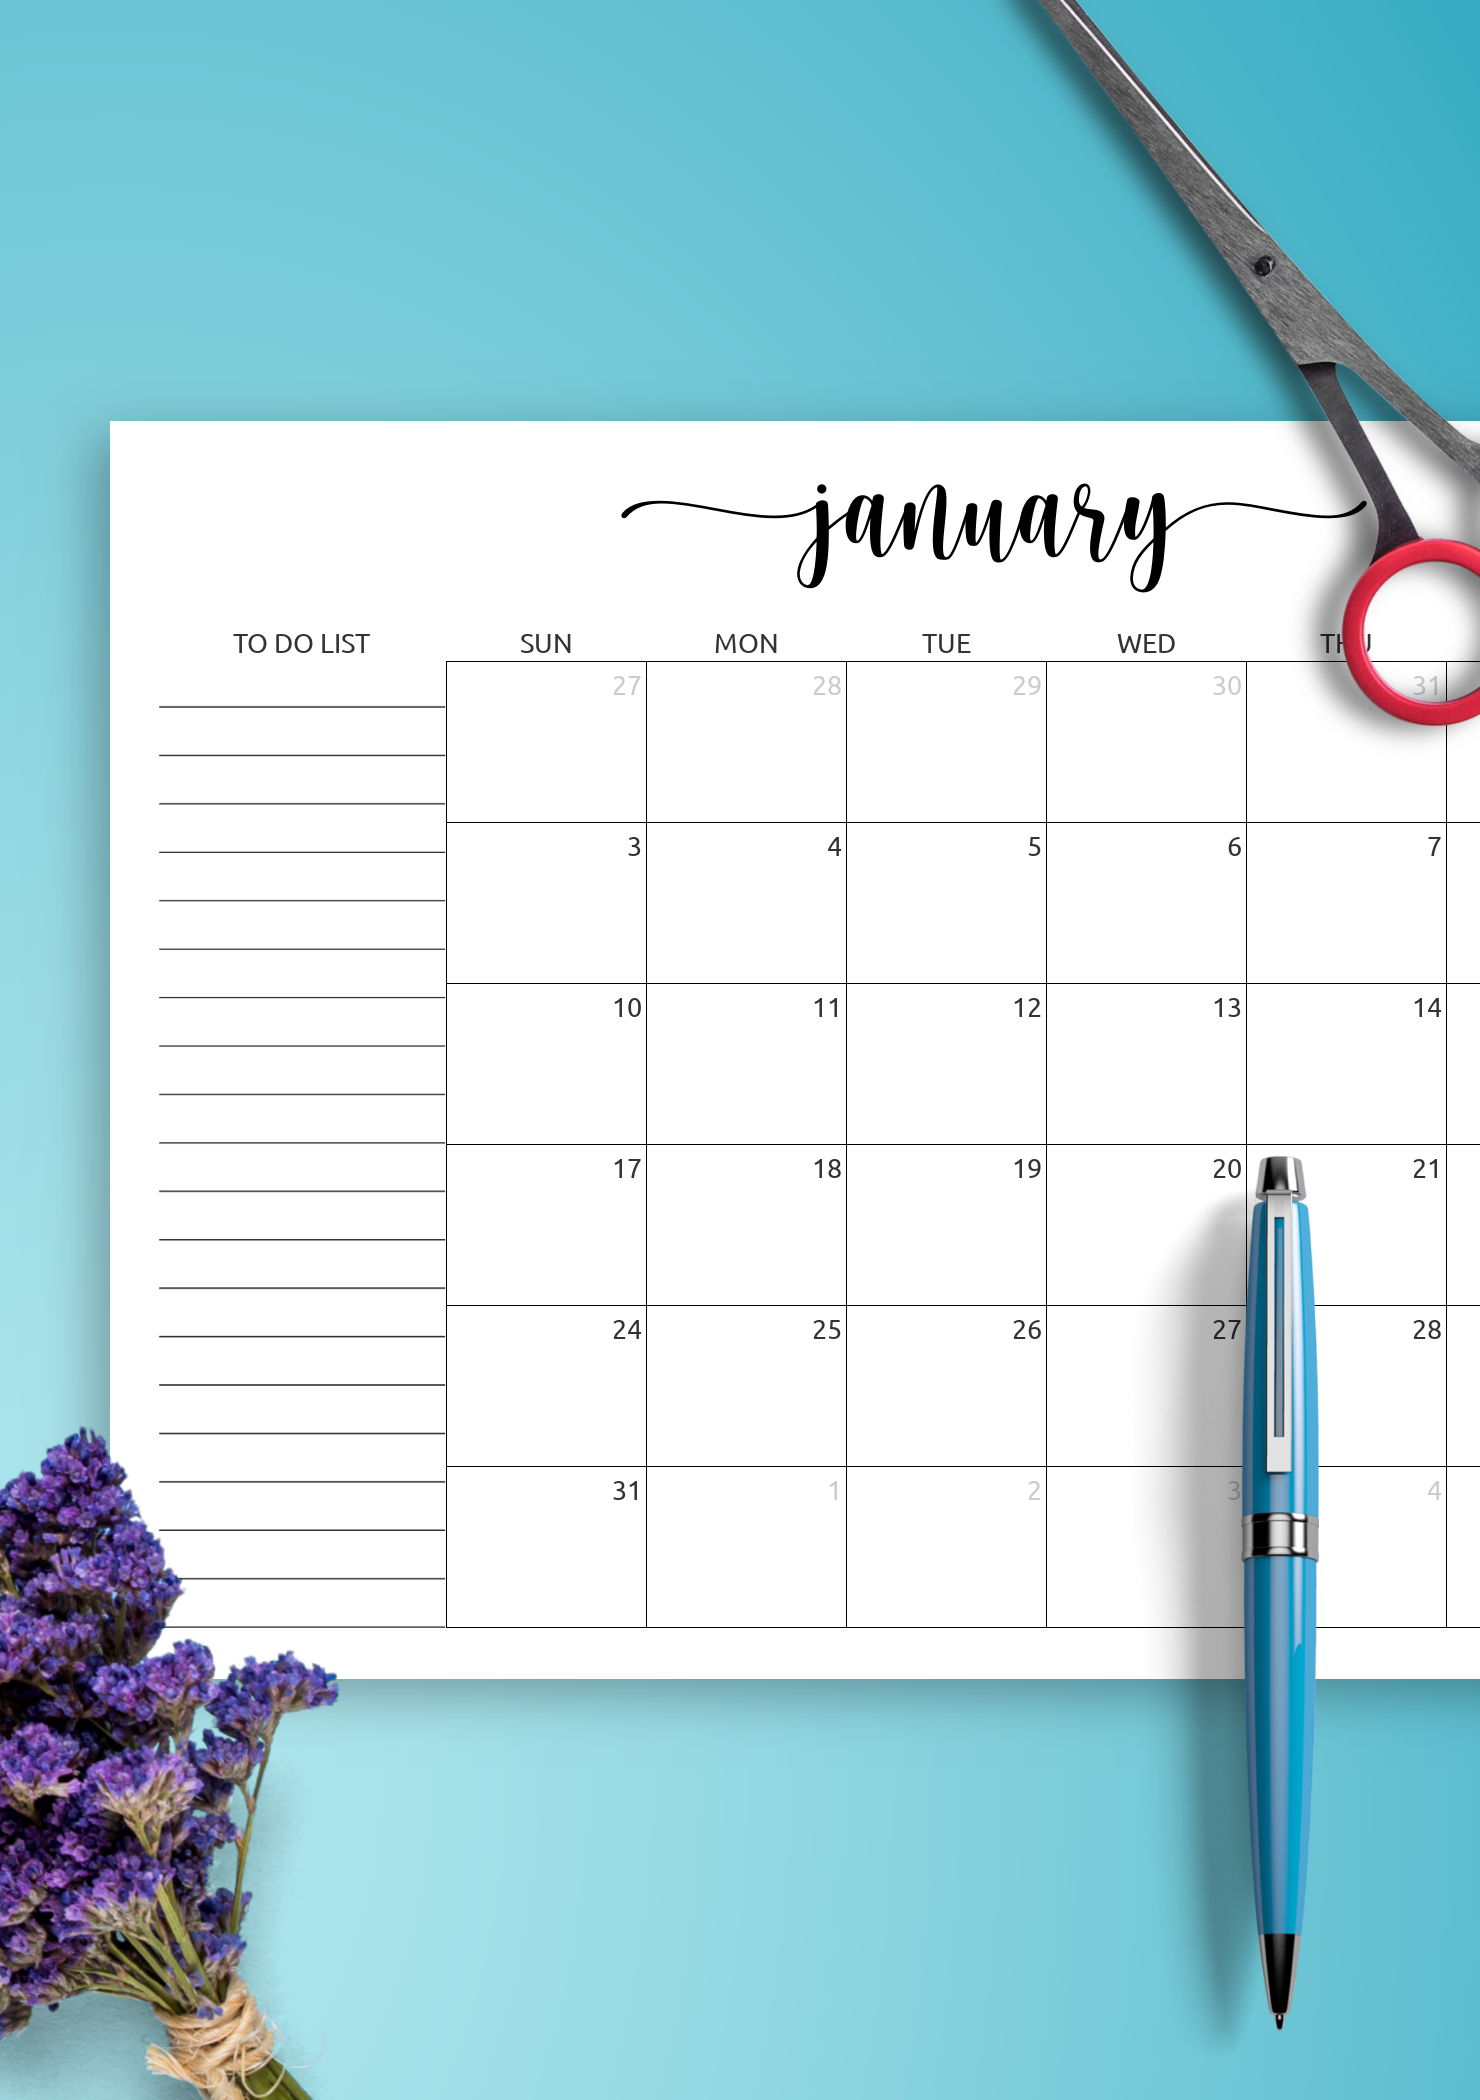 Calendar To Do List Template